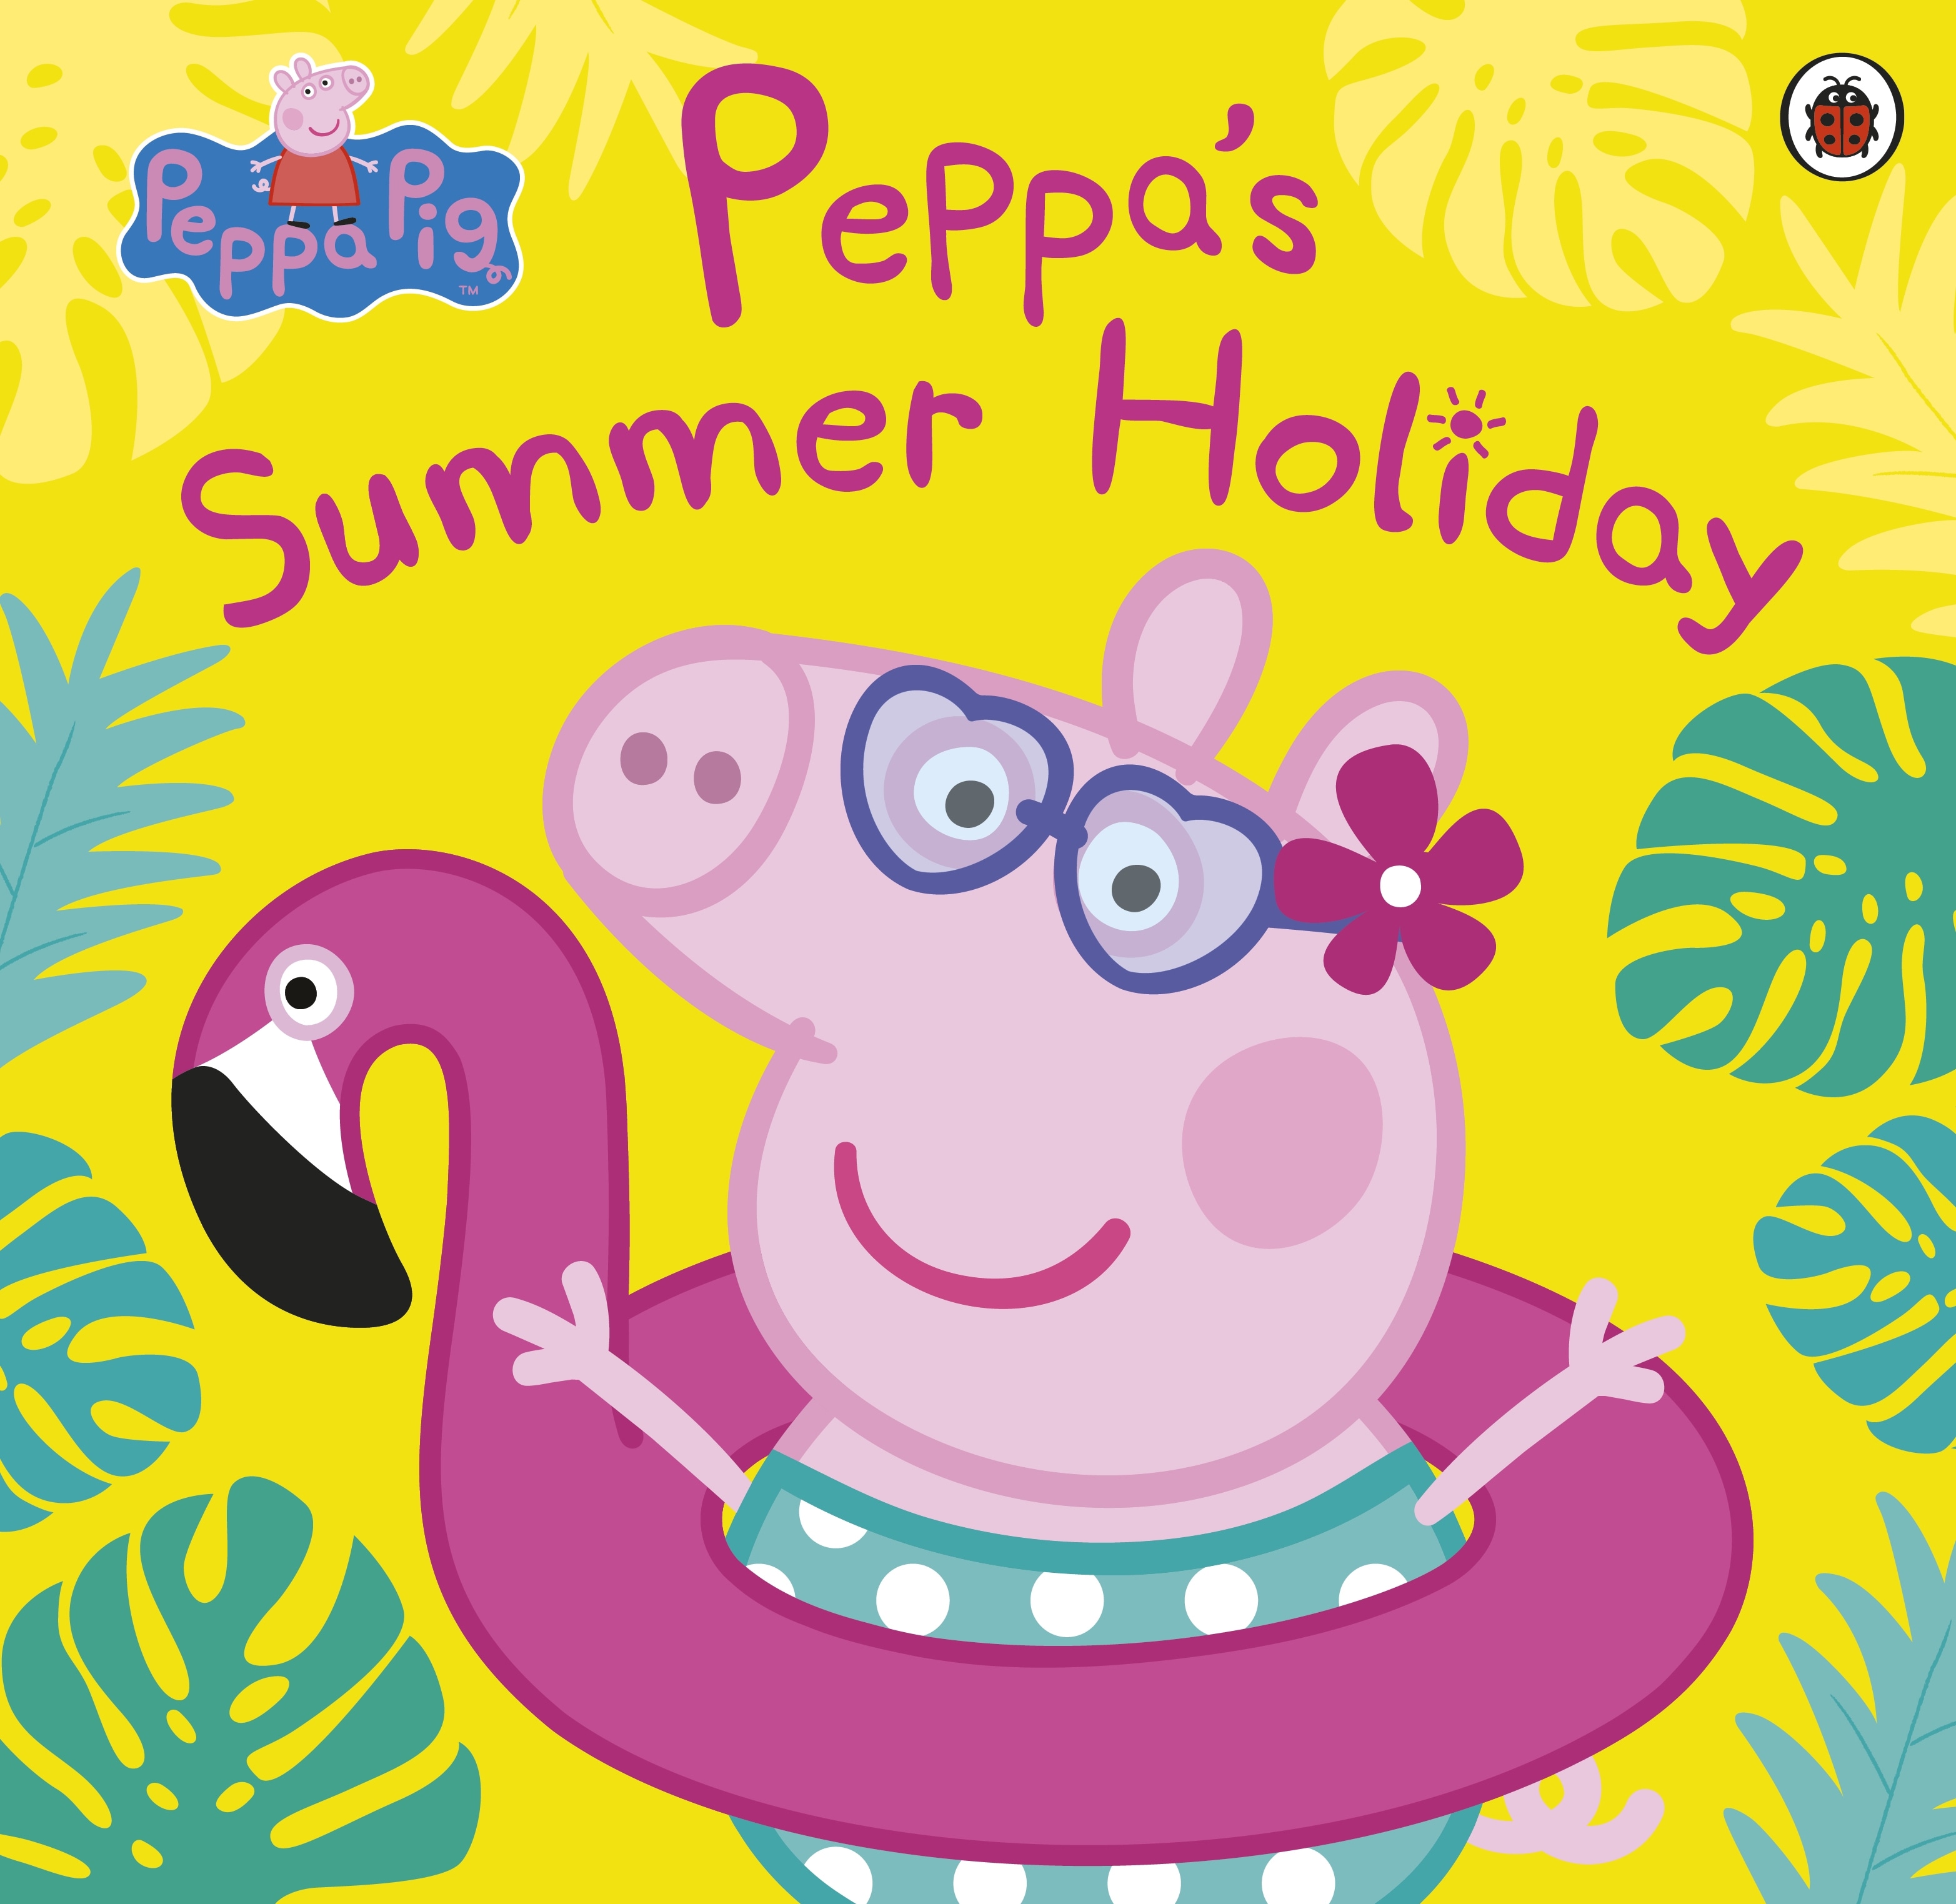 Book “Peppa Pig: Peppa's Summer Holiday” by Peppa Pig — August 6, 2020